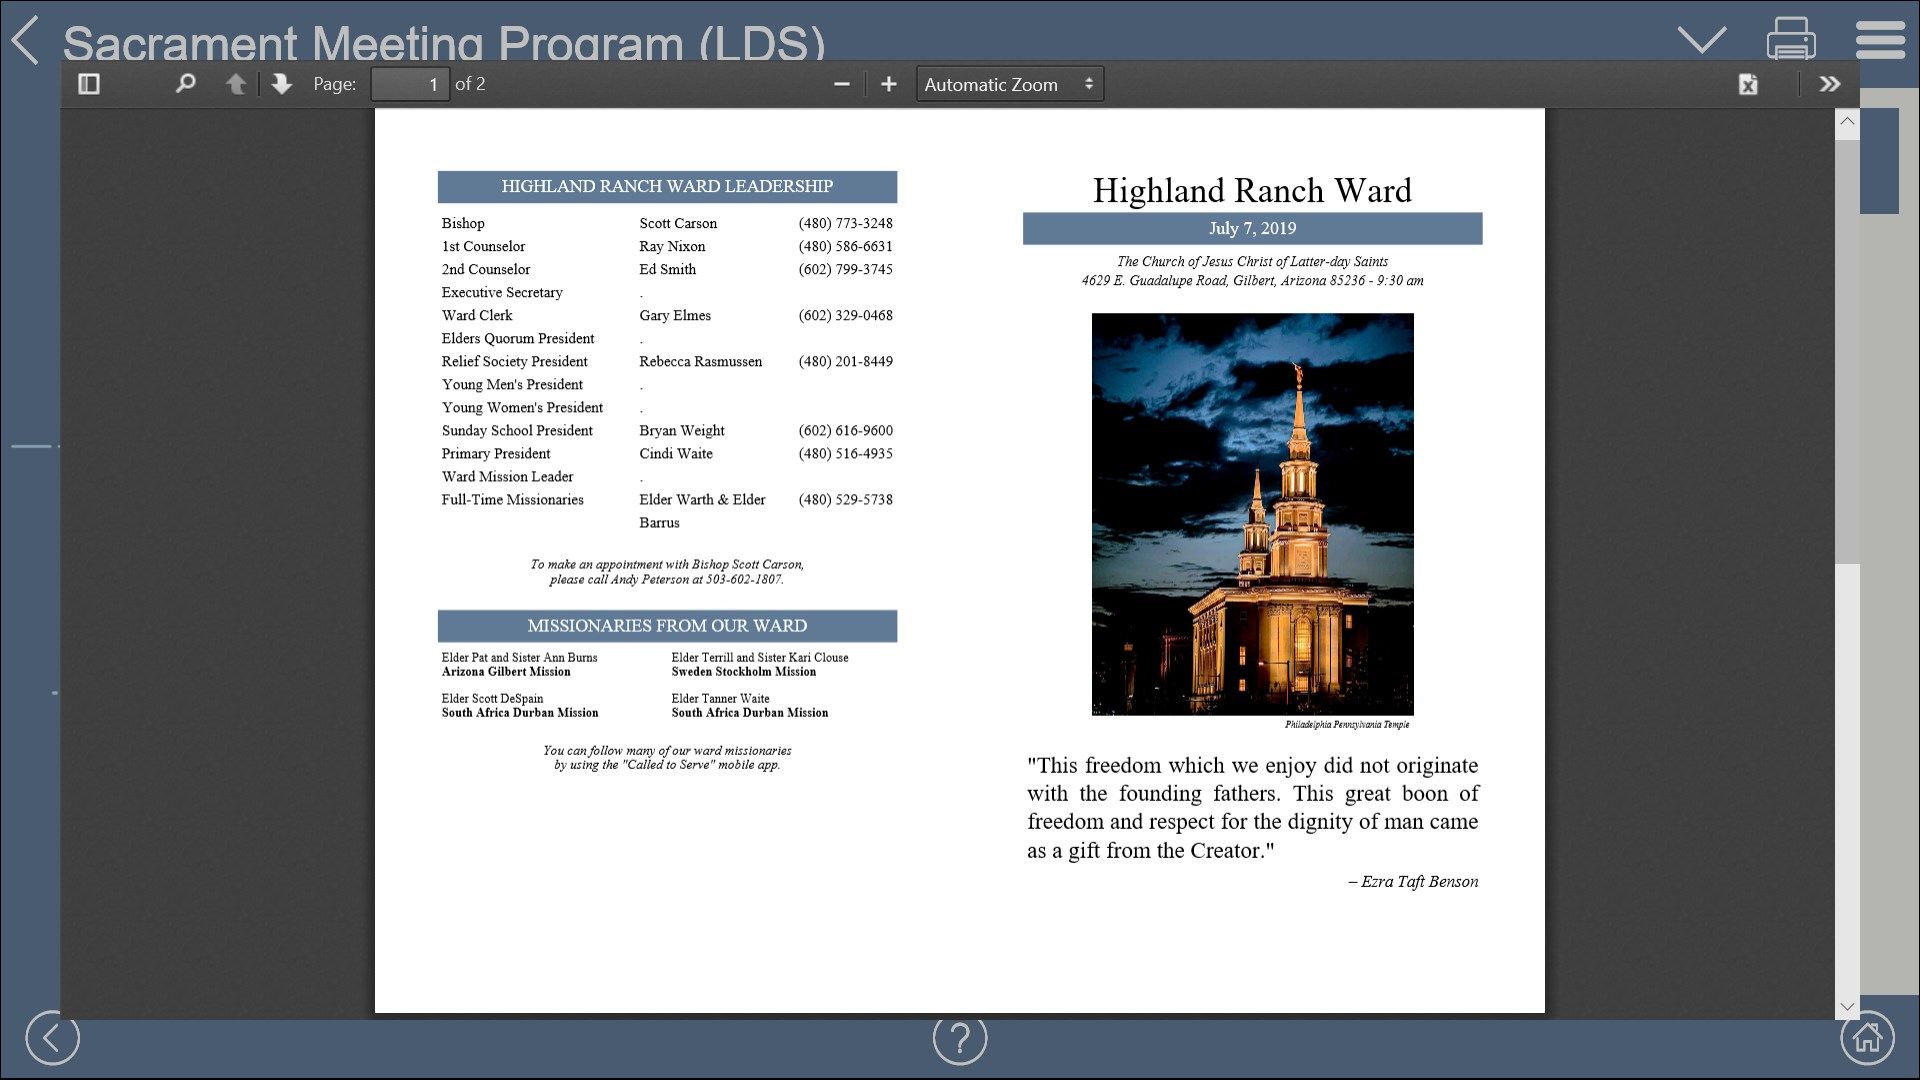 Creates a PDF copy of your program to print.